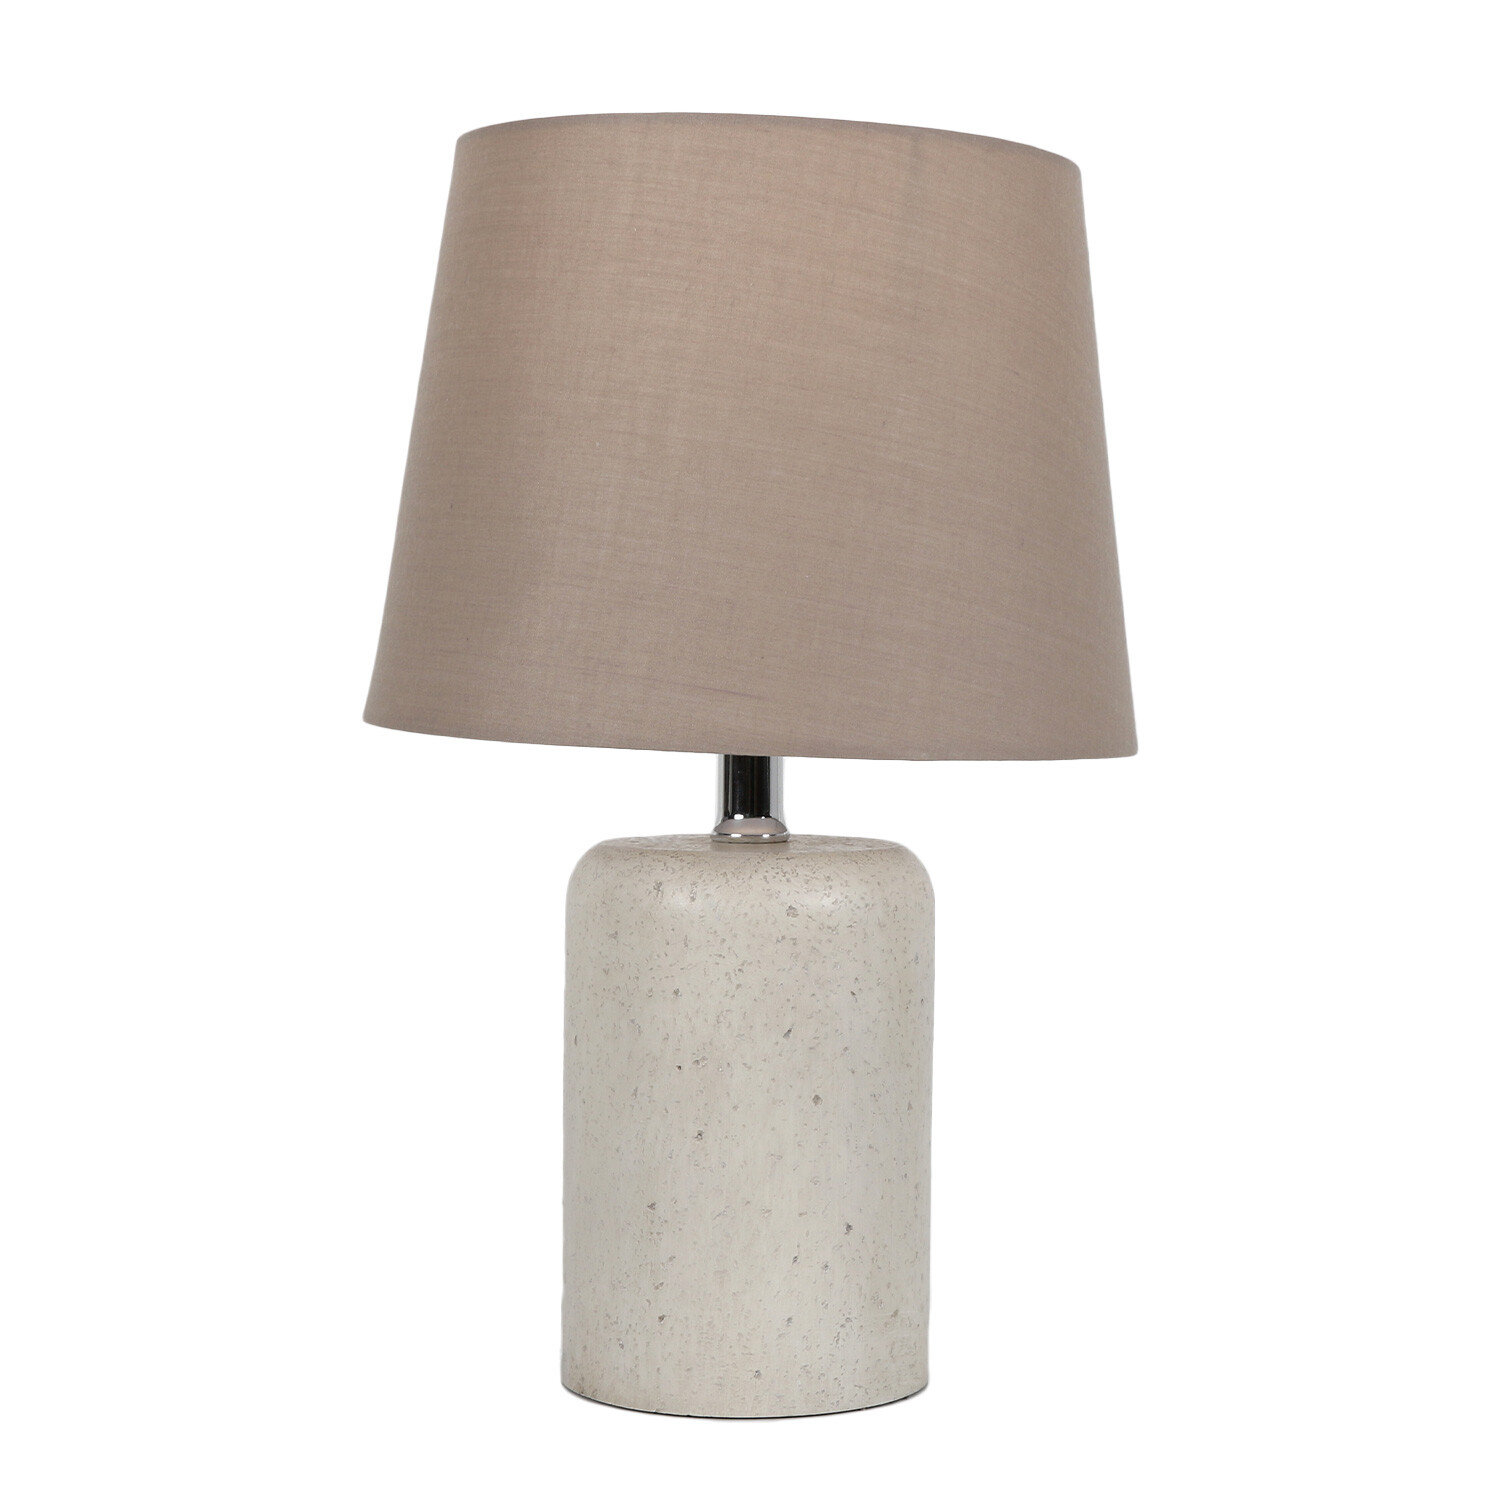 Ewan Neutral Table Lamp Image 2